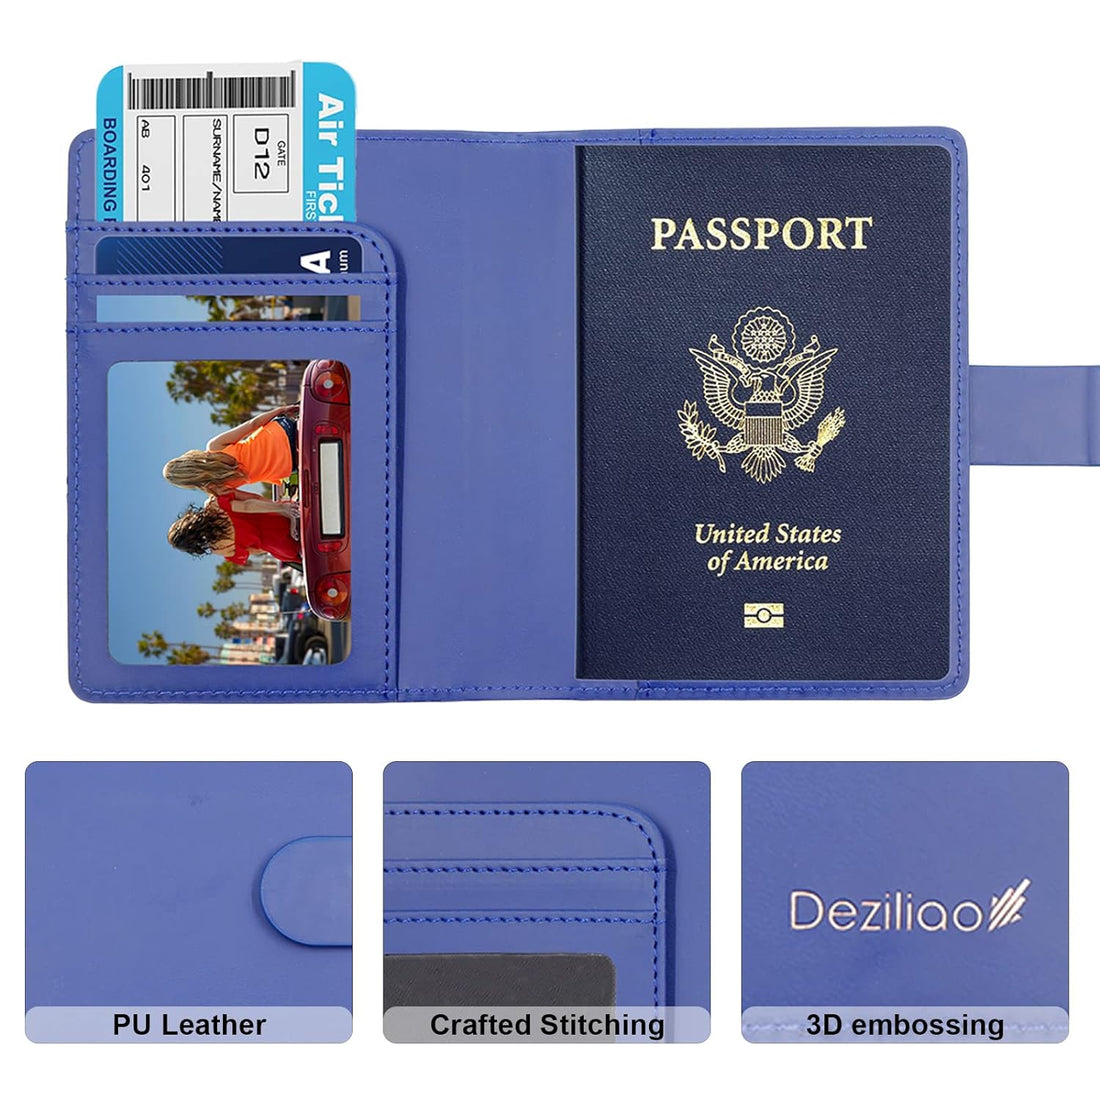 Deziliao Passport and Vaccine Card Holder Combo, PU Leather Passport Holder with Vaccine Card Slot, Passport Wallet for Men and Women, Blue, Classic